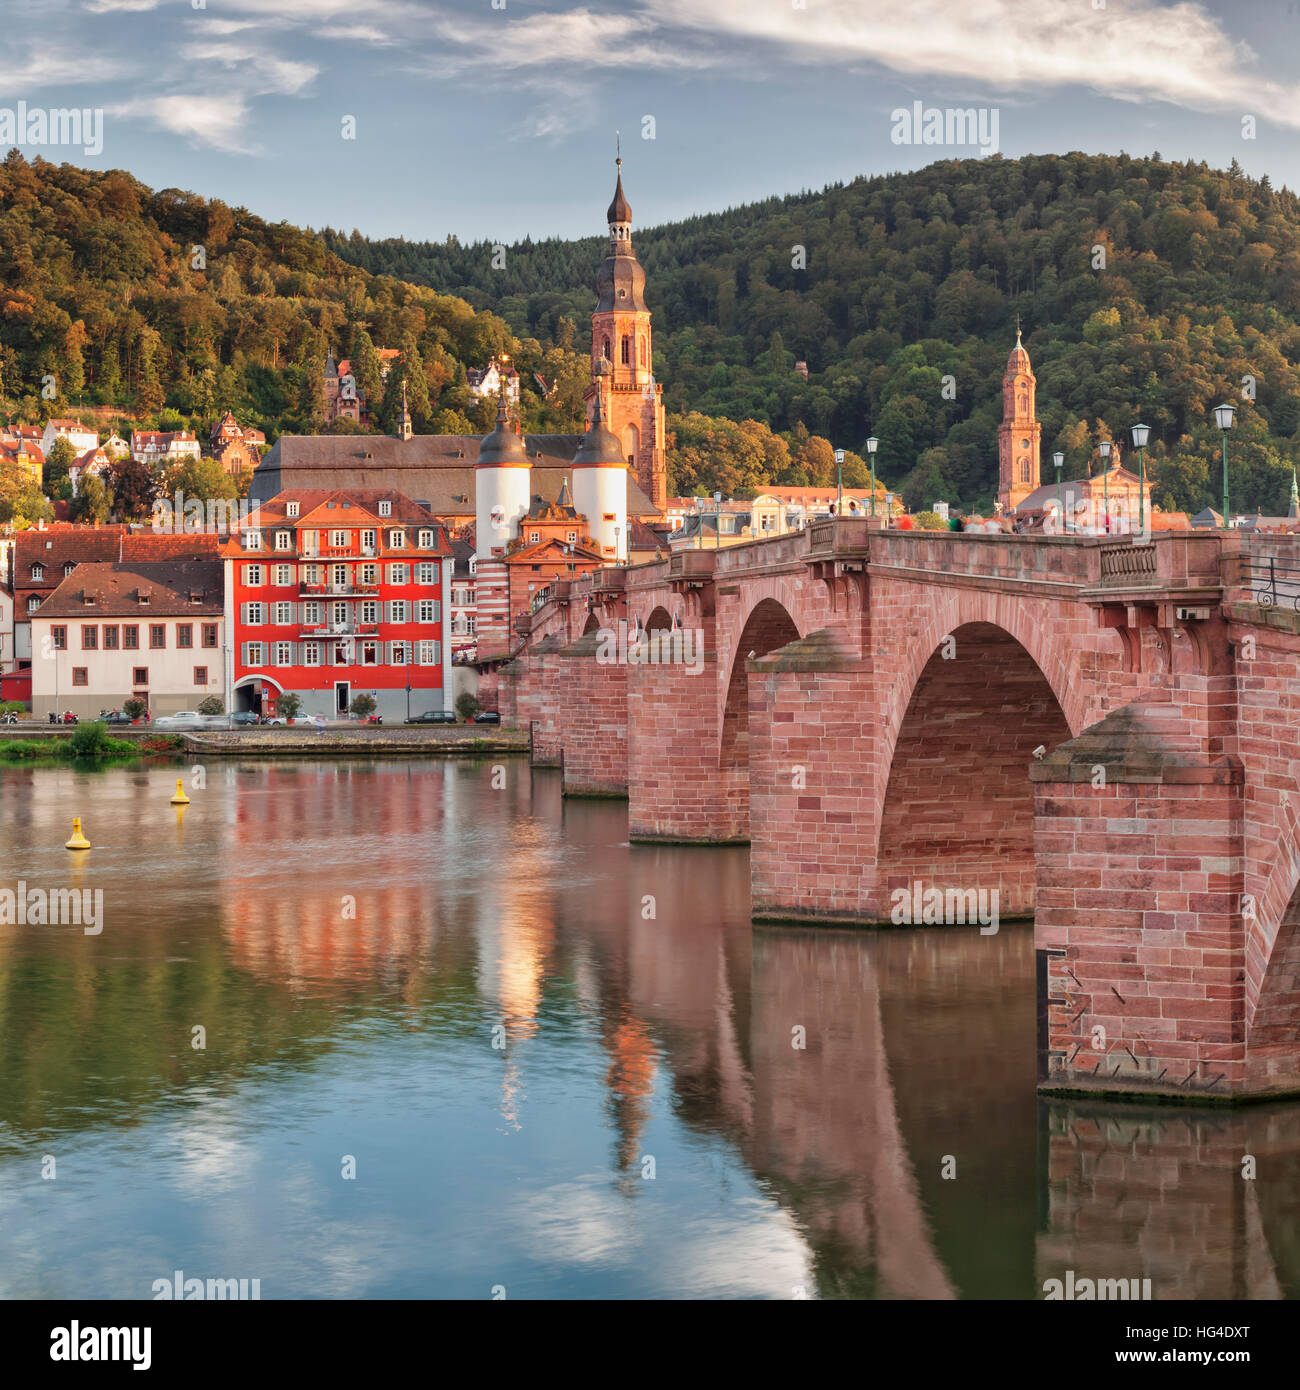 Old town with Karl-Theodor-Bridge, Gate and Heilig Geist Church, Neckar River, Heidelberg, Baden-Wurttemberg, Germany Stock Photo